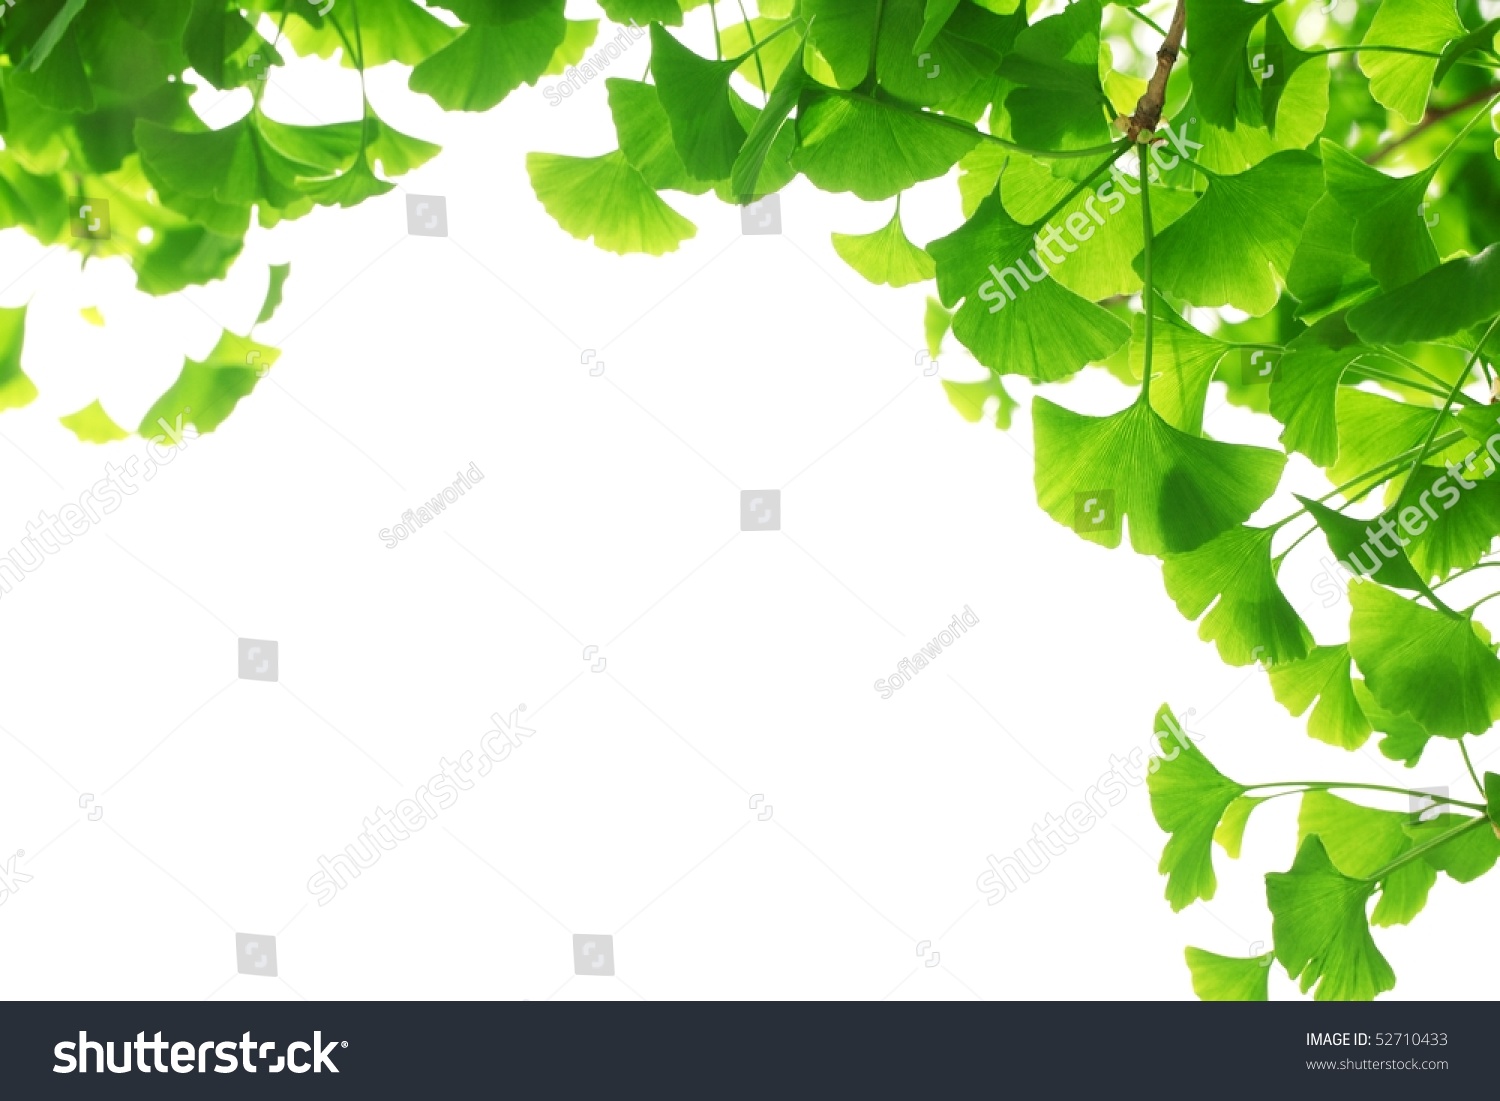 clip art ginkgo leaf - photo #35